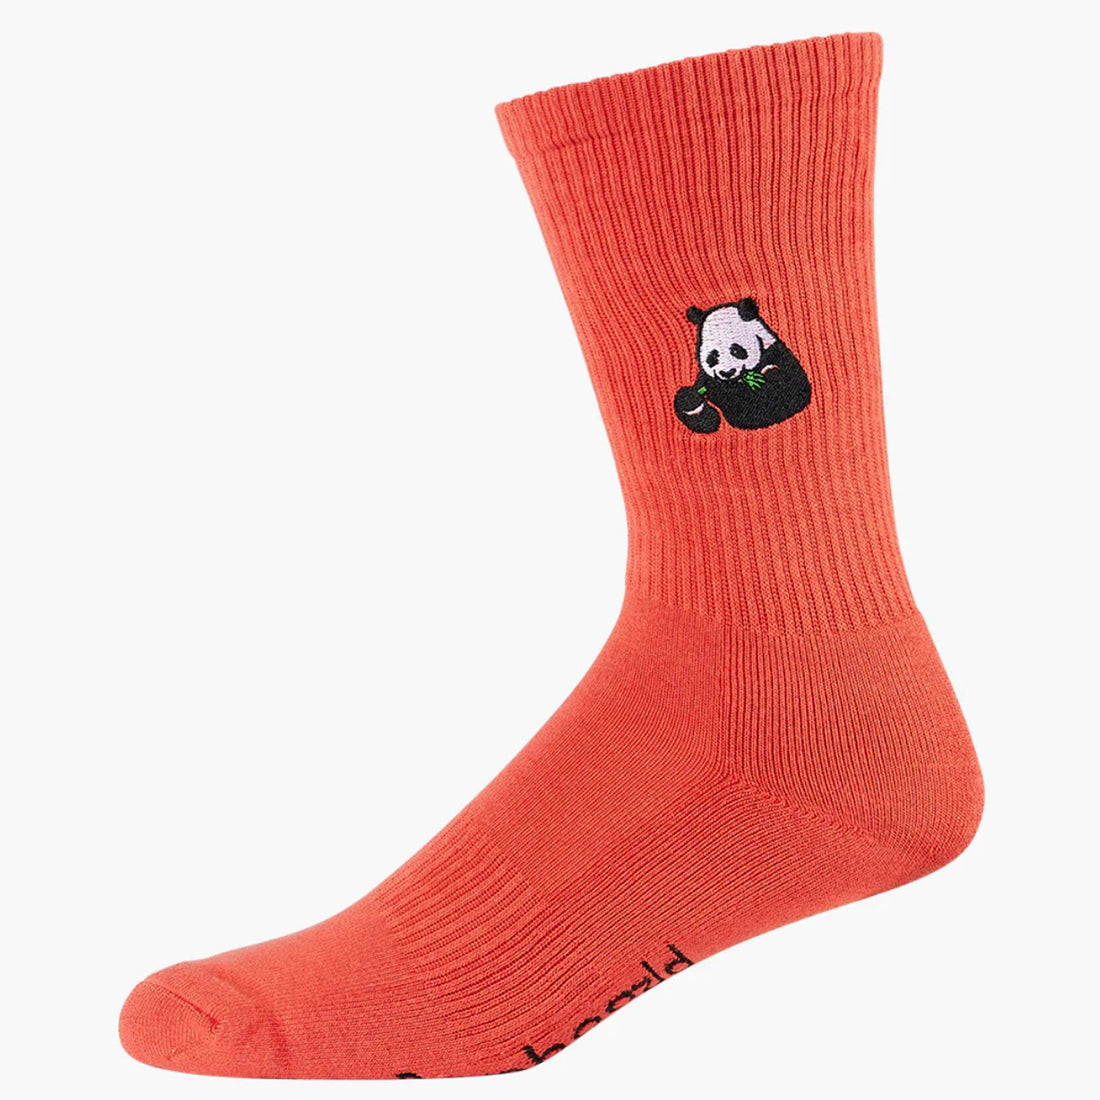 Bamboo Men's Socks - Panda Zoo Conservation Socks